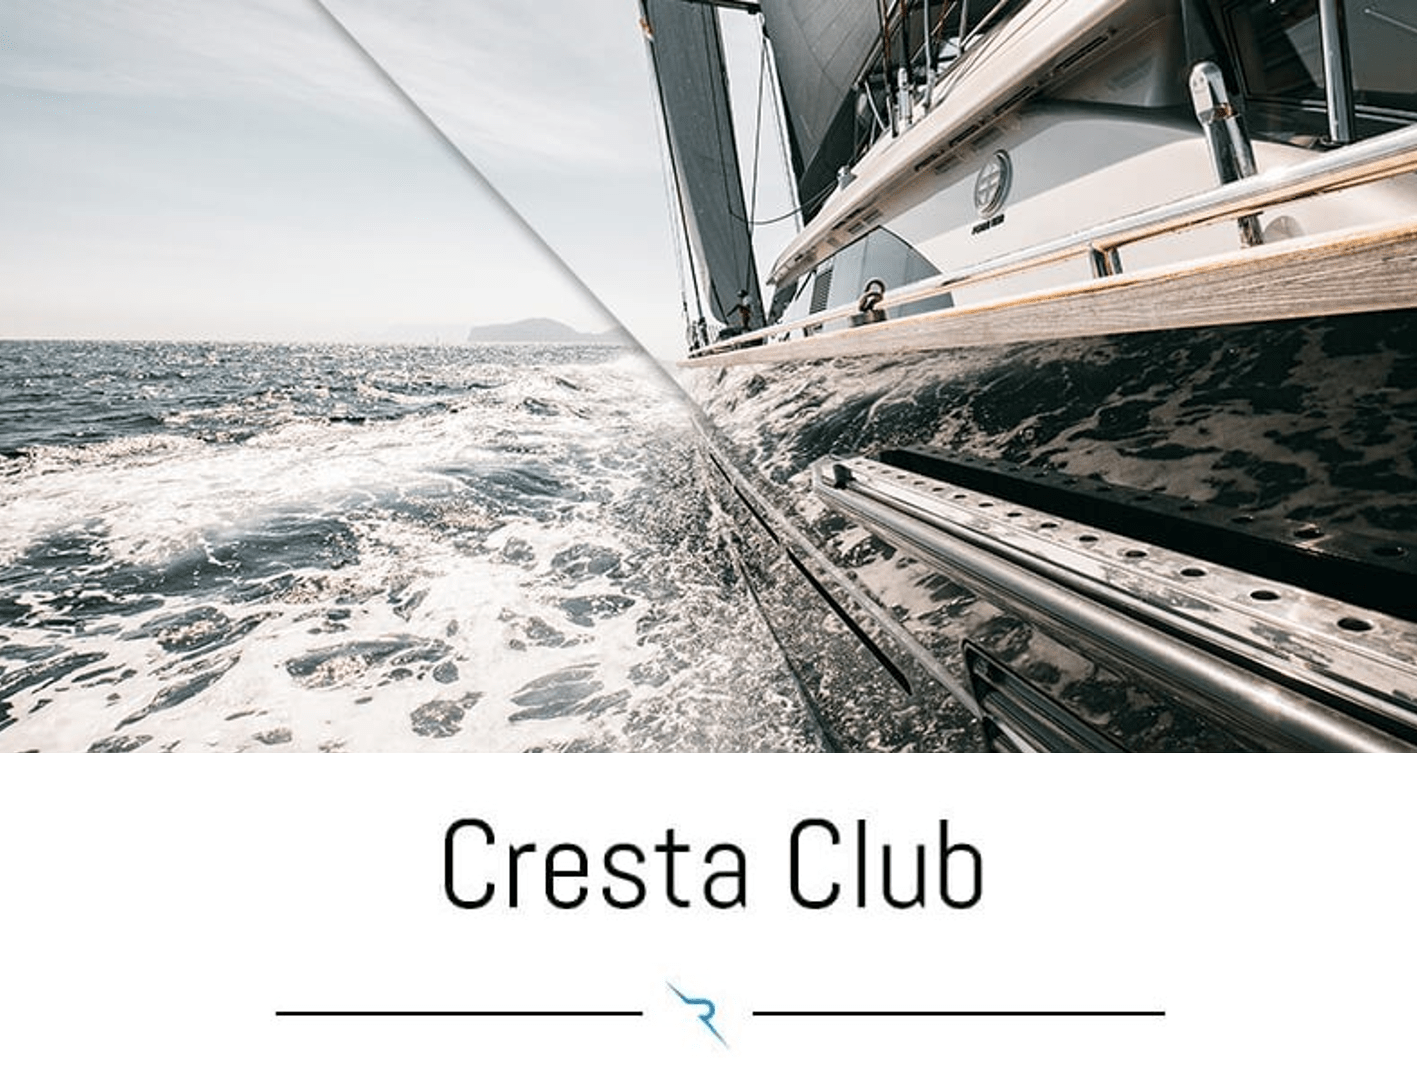 Launch of Cresta Club